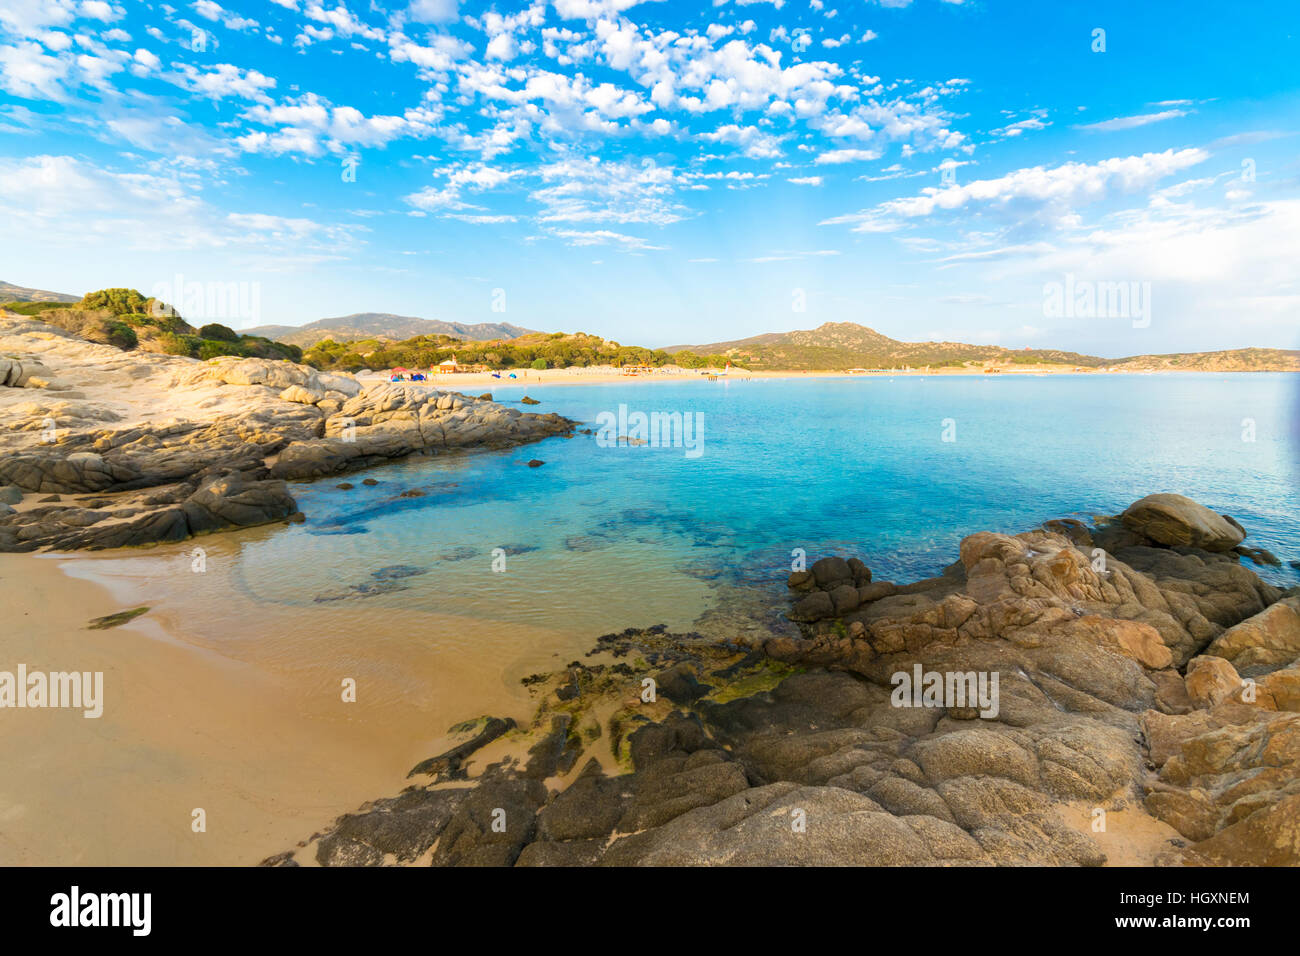 The sea and the pristine beaches of Chia, Sardinia island, Italy. Stock Photo